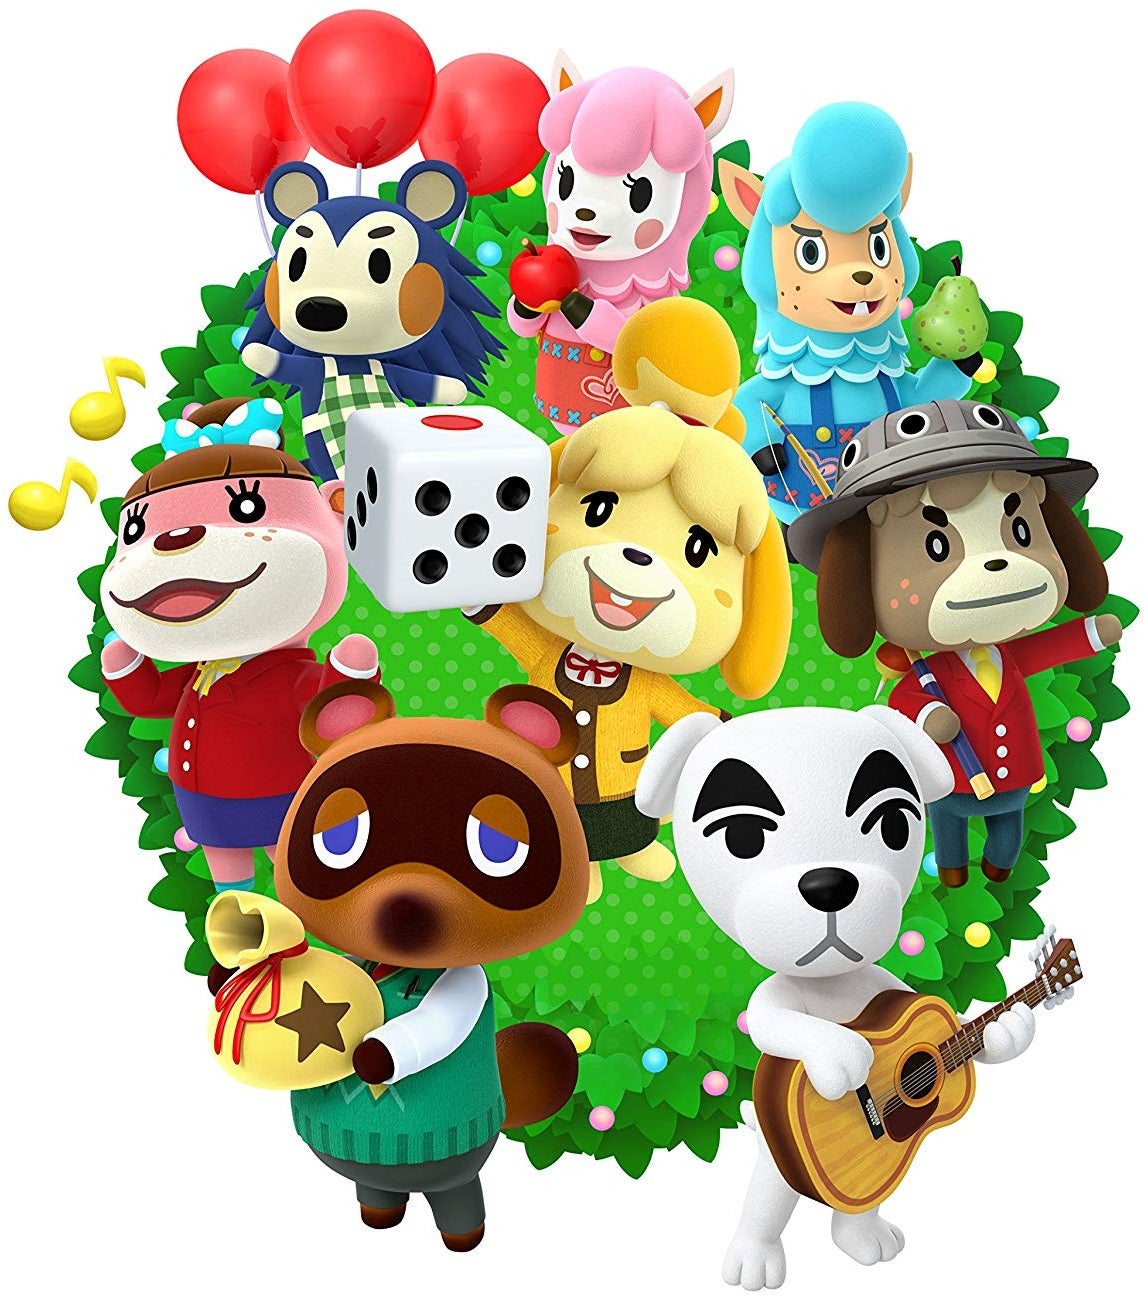 Nintendo Animal Crossing Amiibo Cards - Series 2 - 3 Card Pack